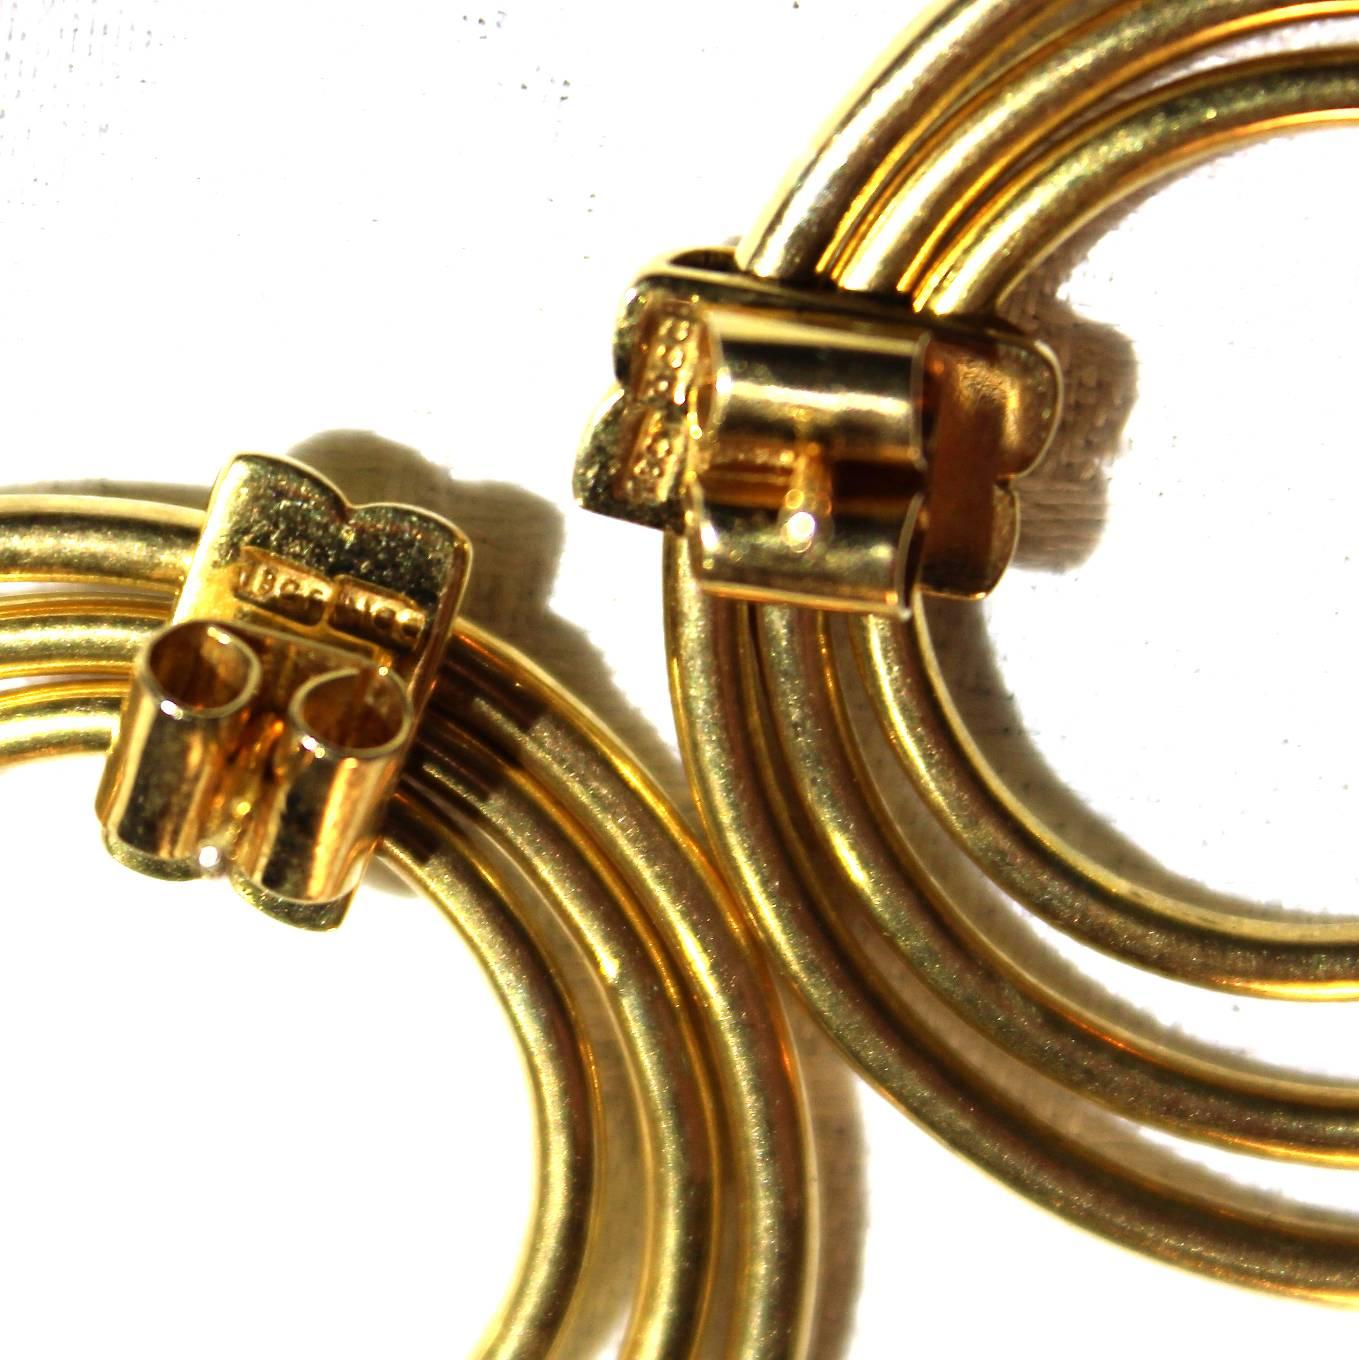 Pair of vintage heavy 18-carat yellow gold triple hoop earrings, probably Italian, 1980s. Measures: Diameter 4 cm. Weight approx 26.5 grams. 

Price 1,250.
 